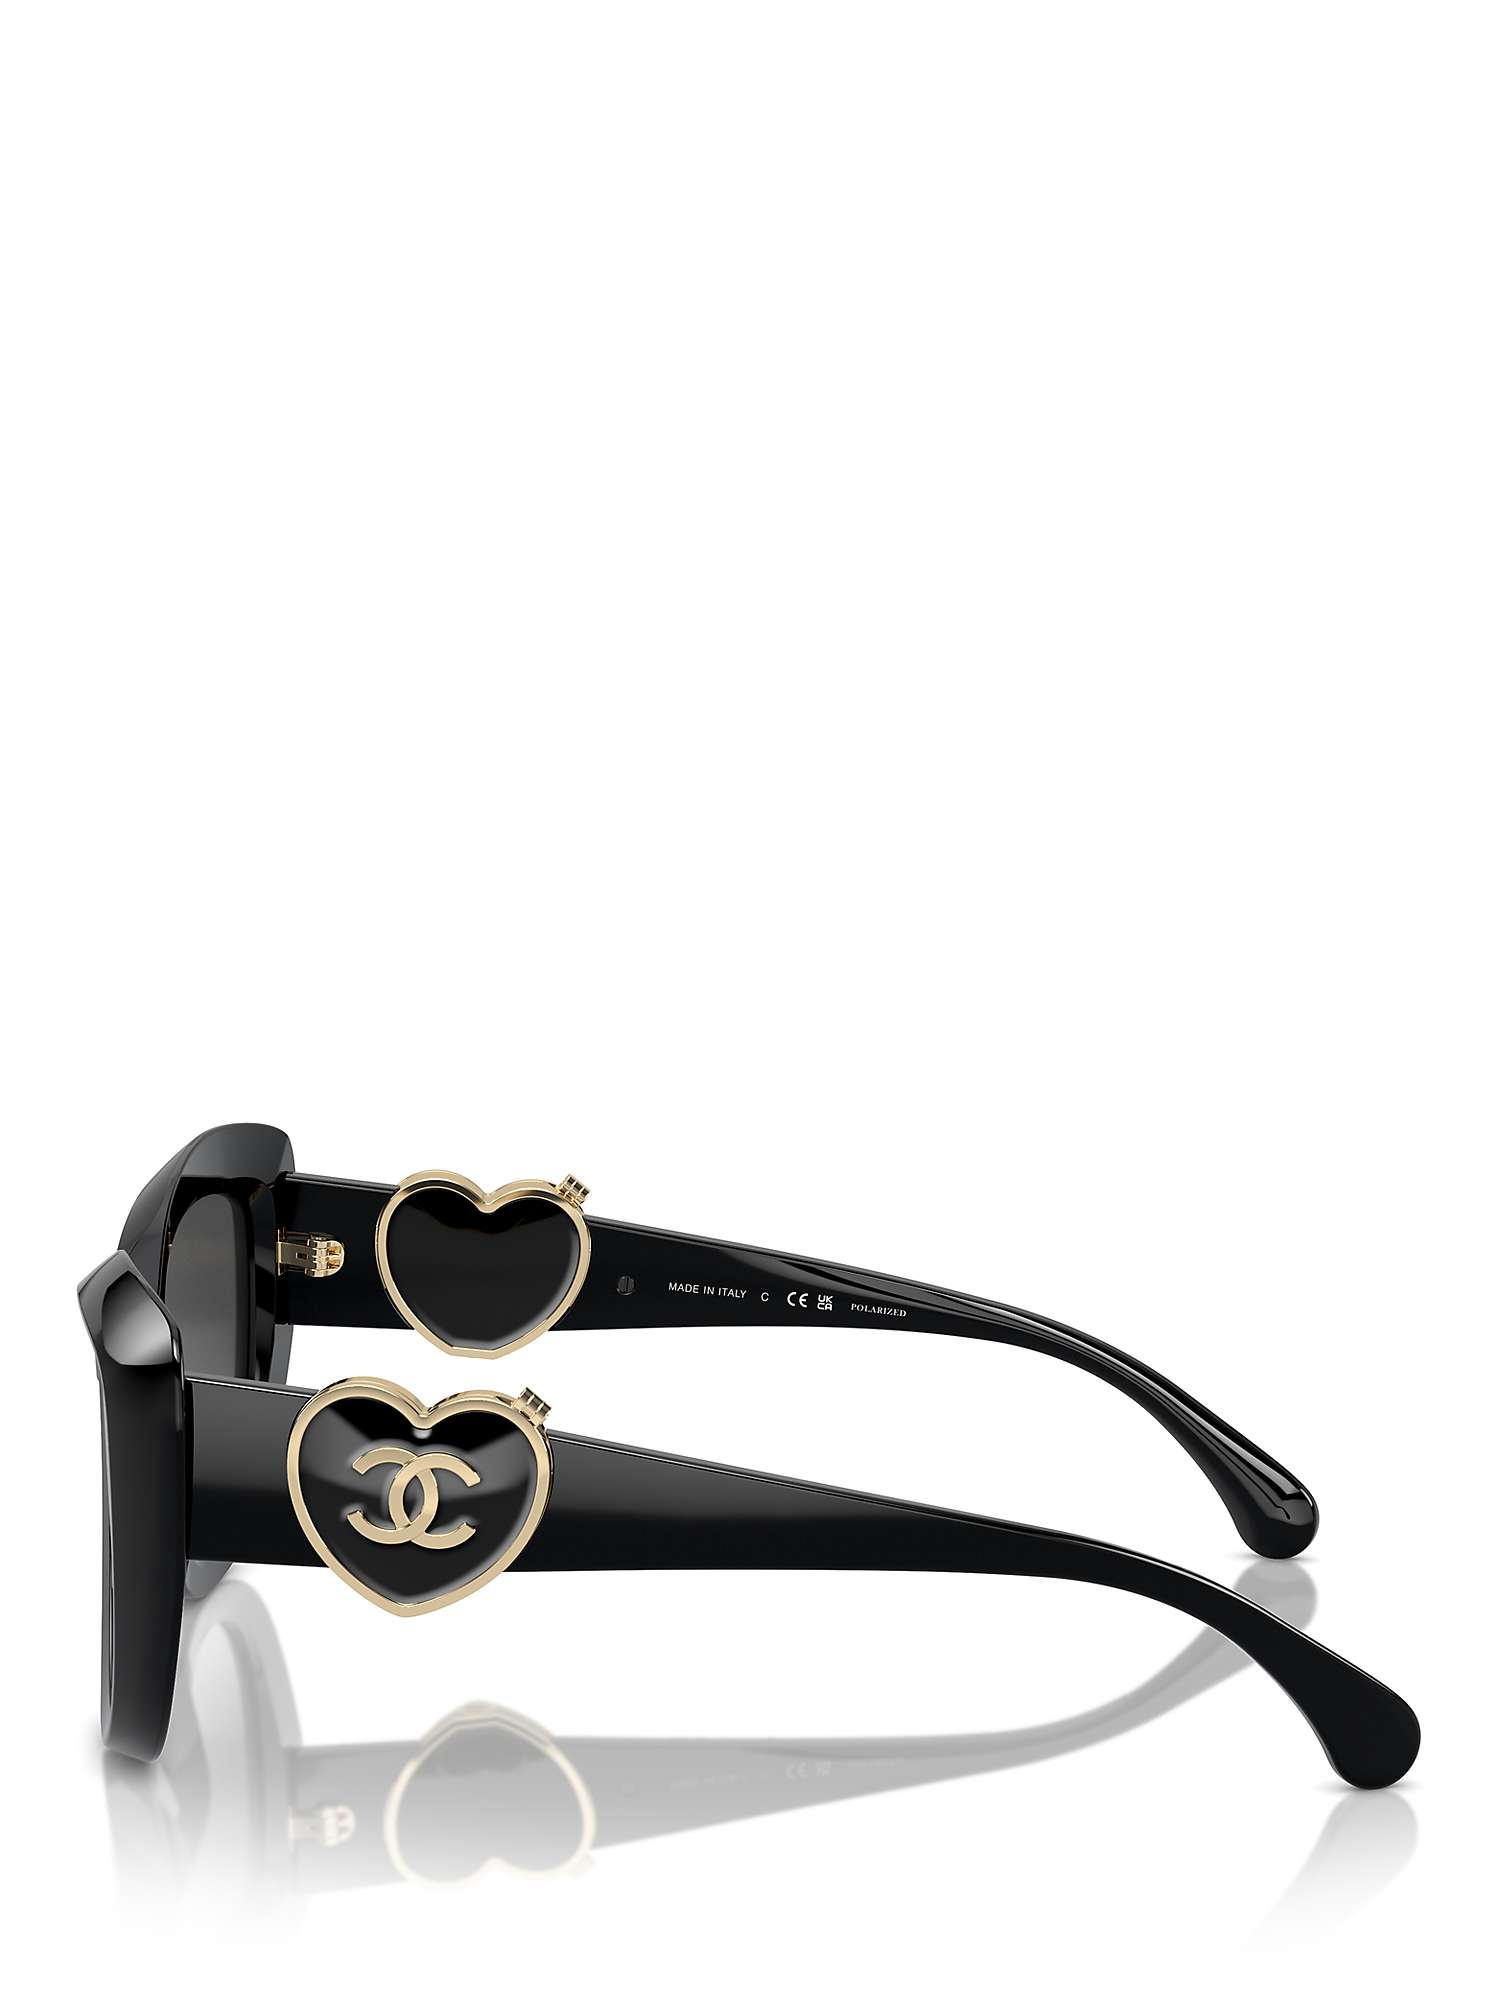 Buy CHANEL Cat Eye Sunglasses CH5517 Black/Grey Gradient Online at johnlewis.com